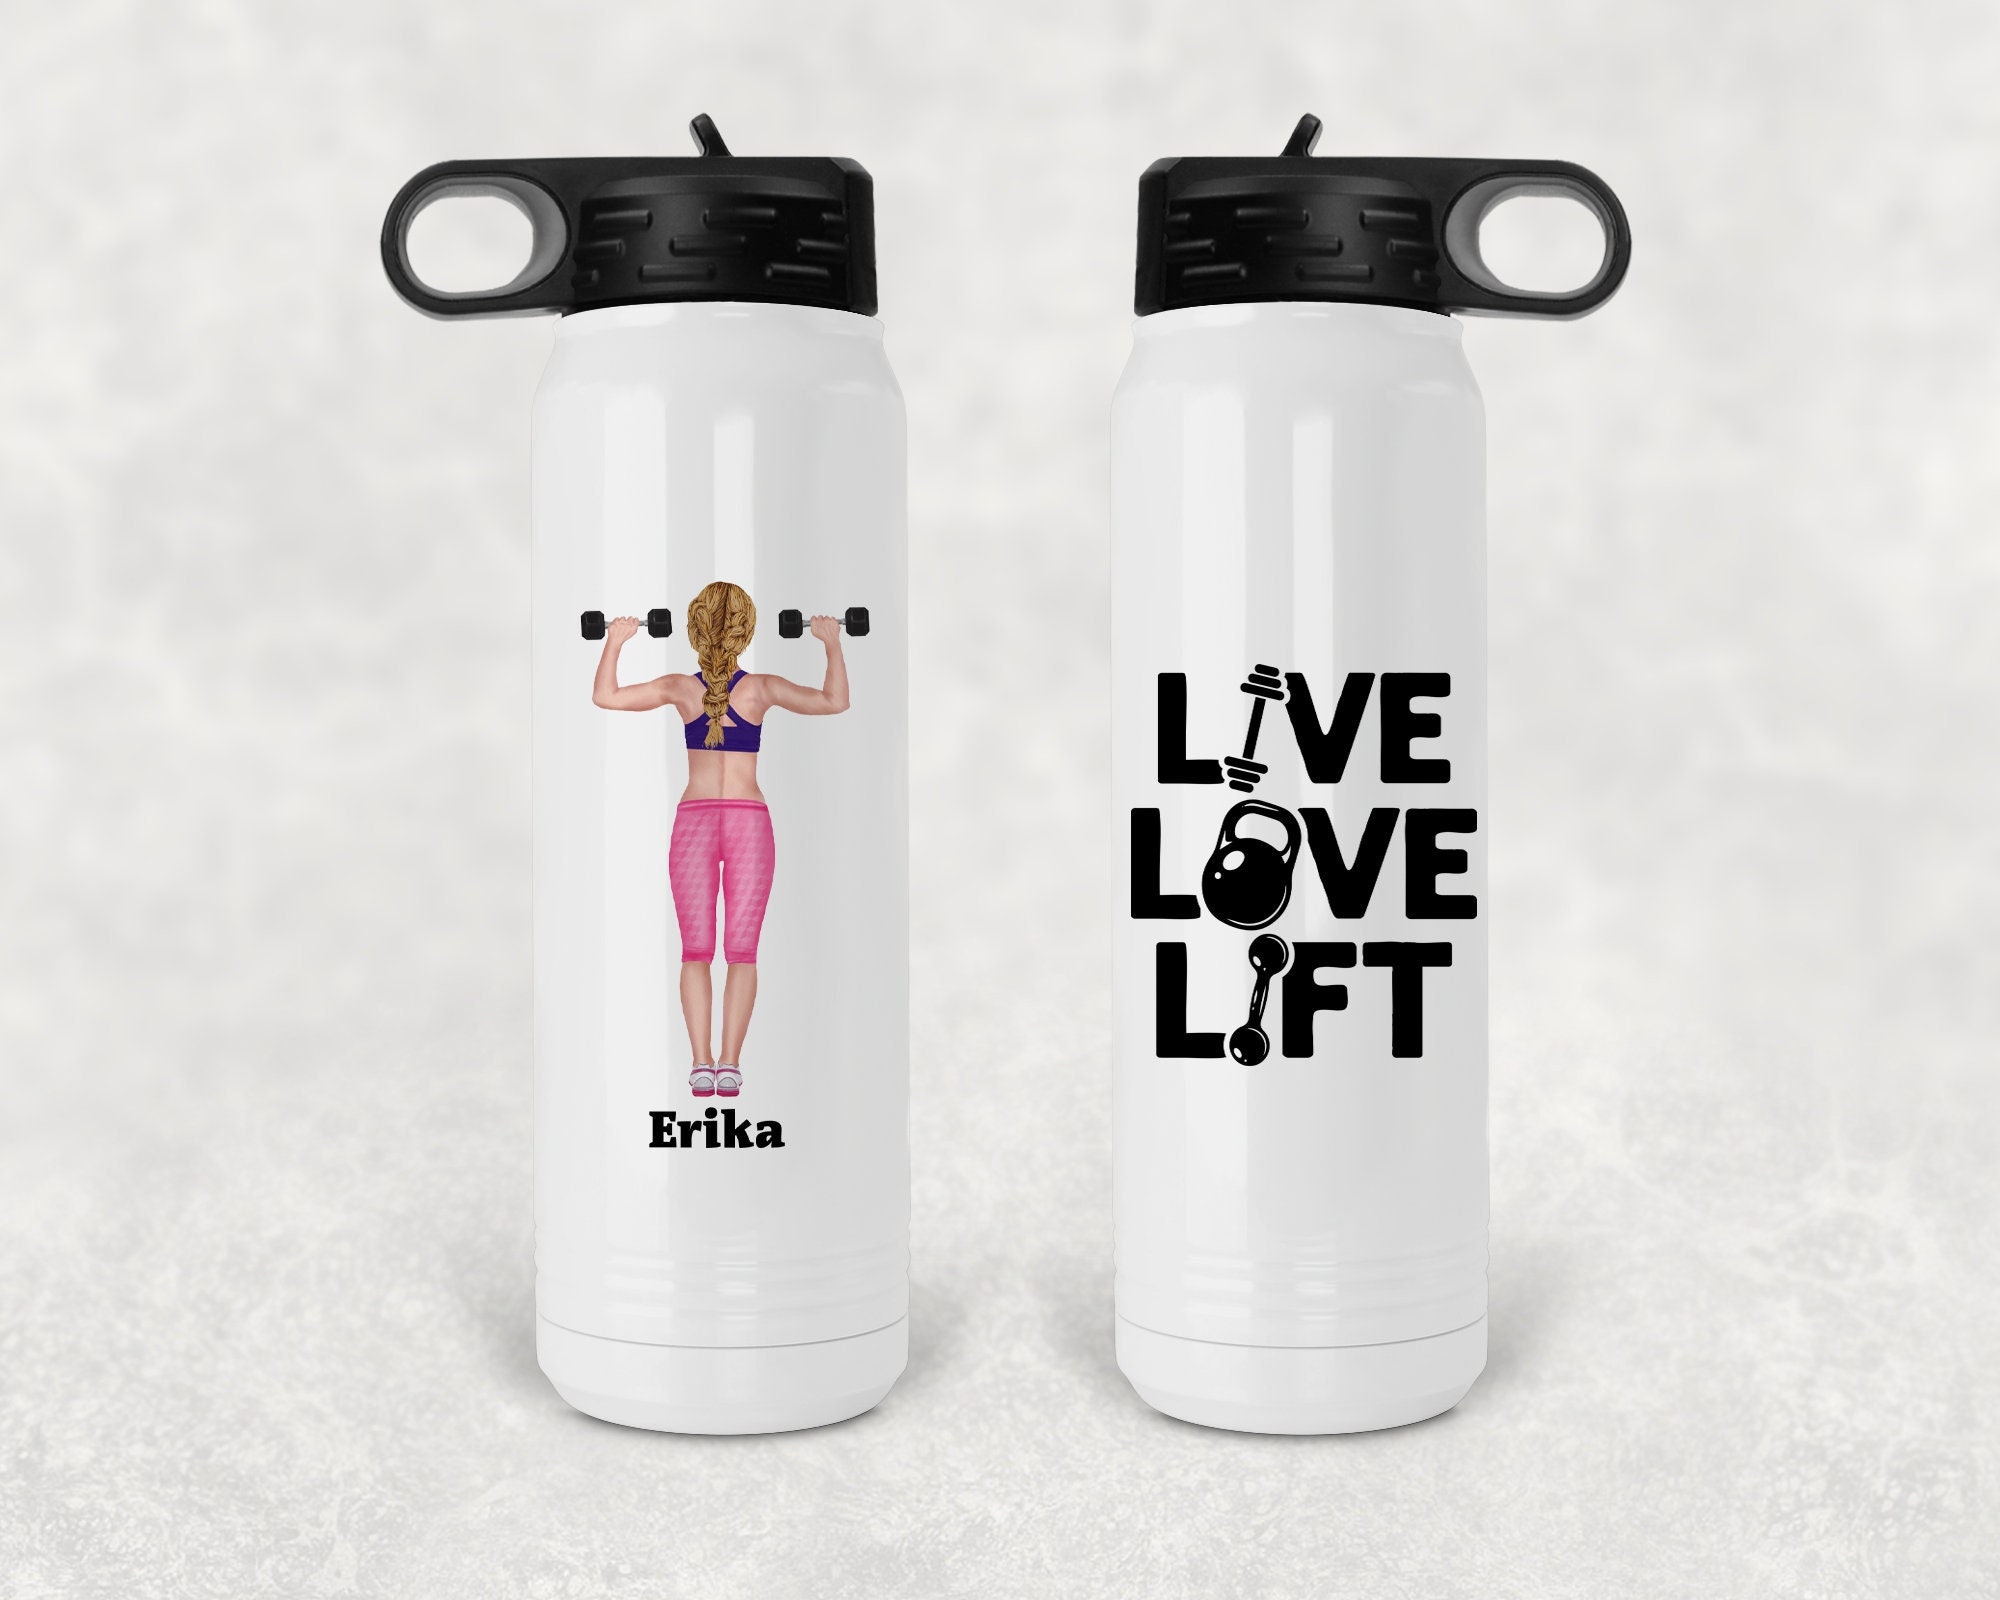 Botella Lift Or Die de 2,2 litros - Botella para fitness / culturismo